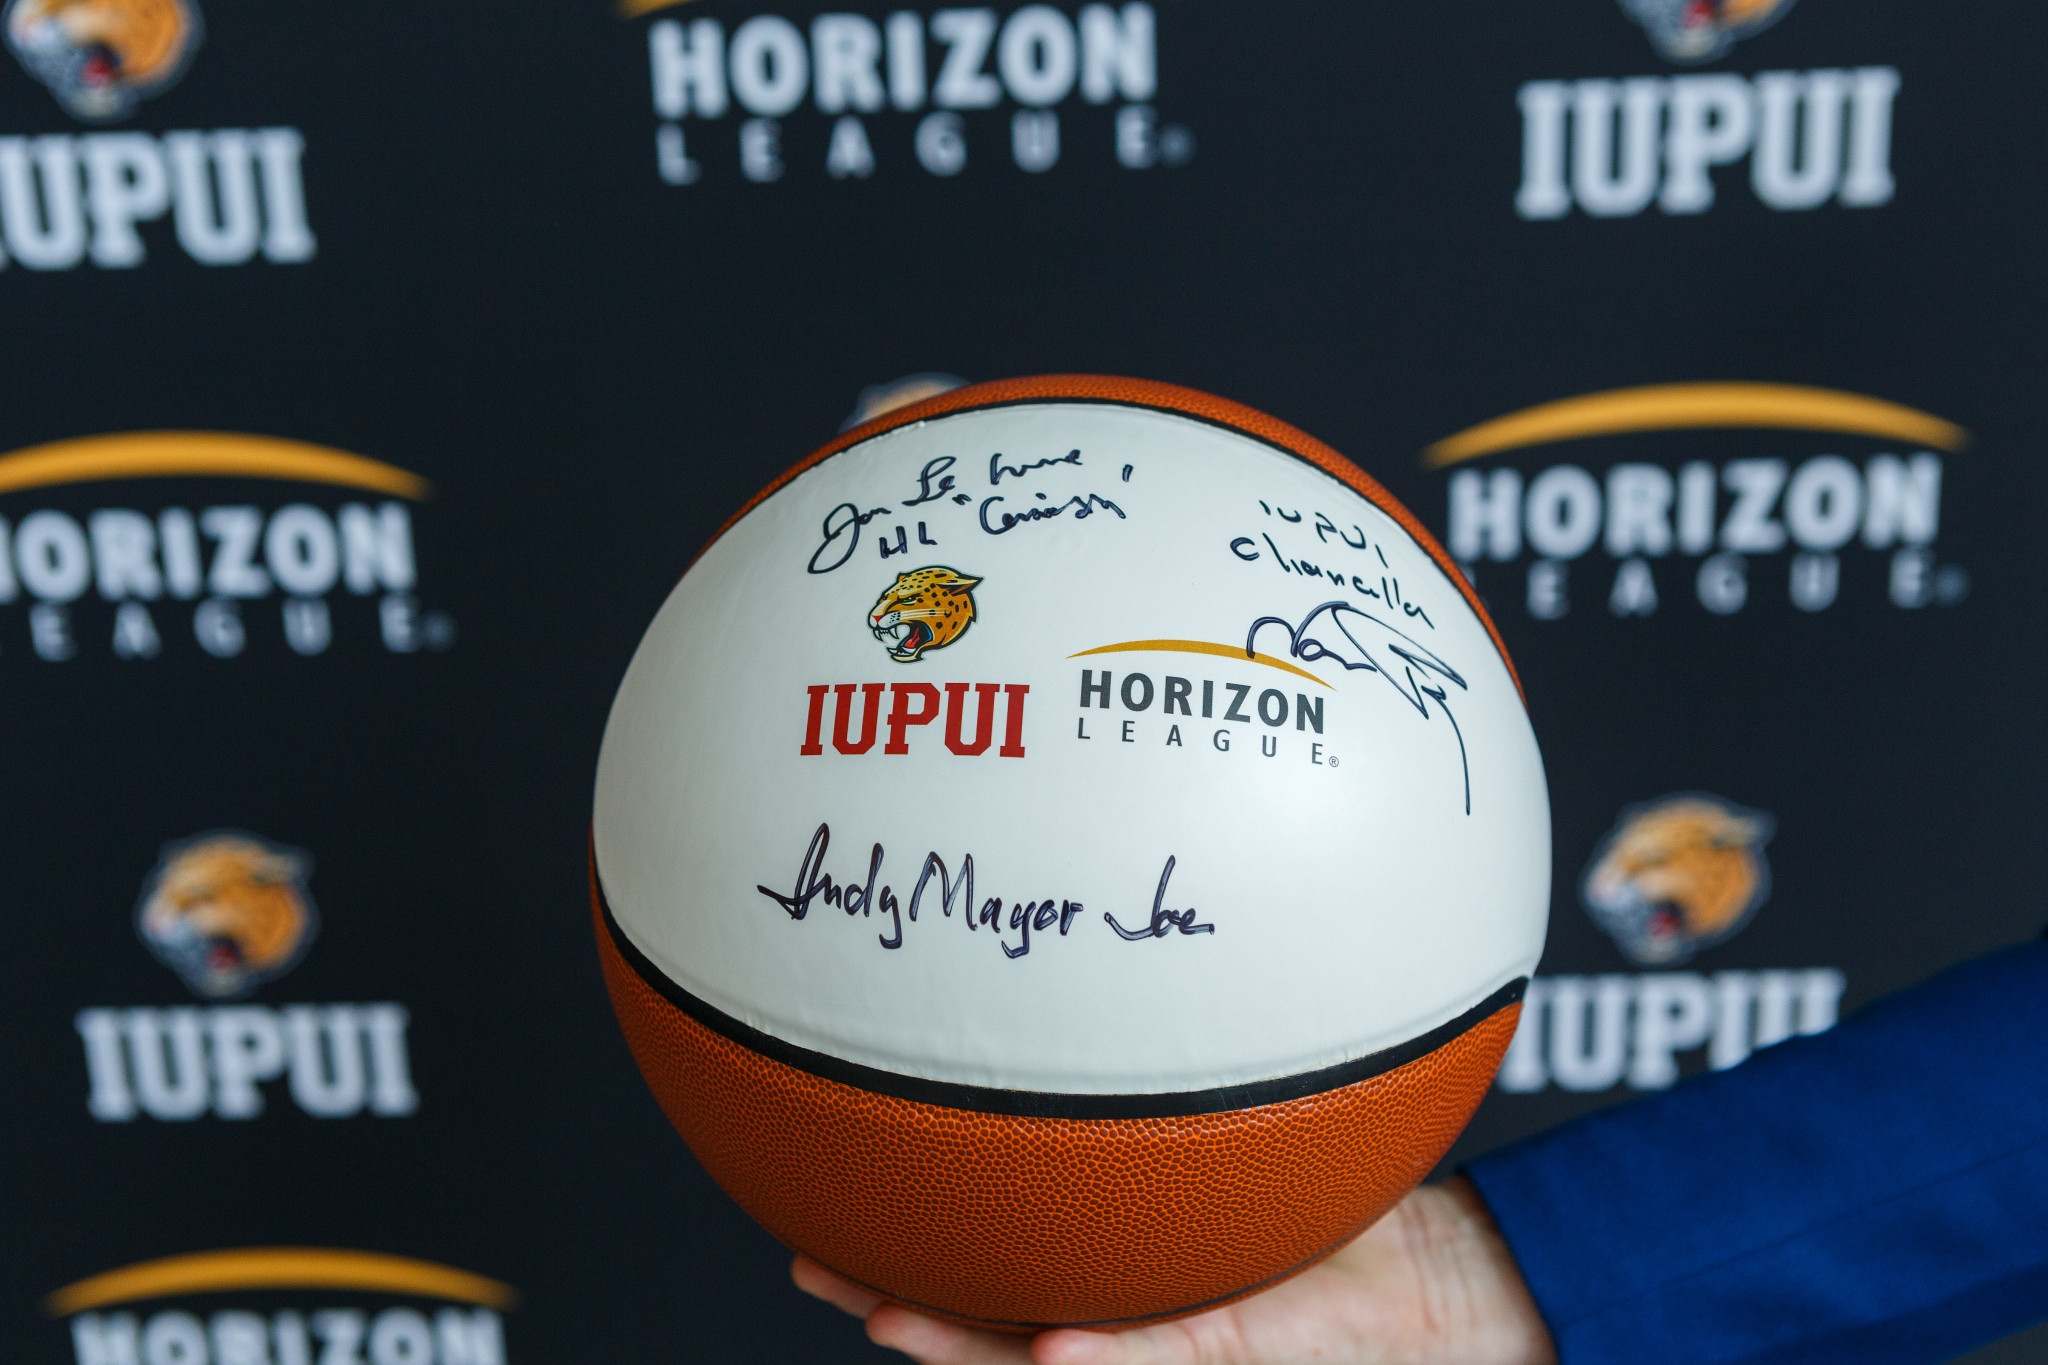 A basketball with the IUPUI Jaguar and Horizon league logos